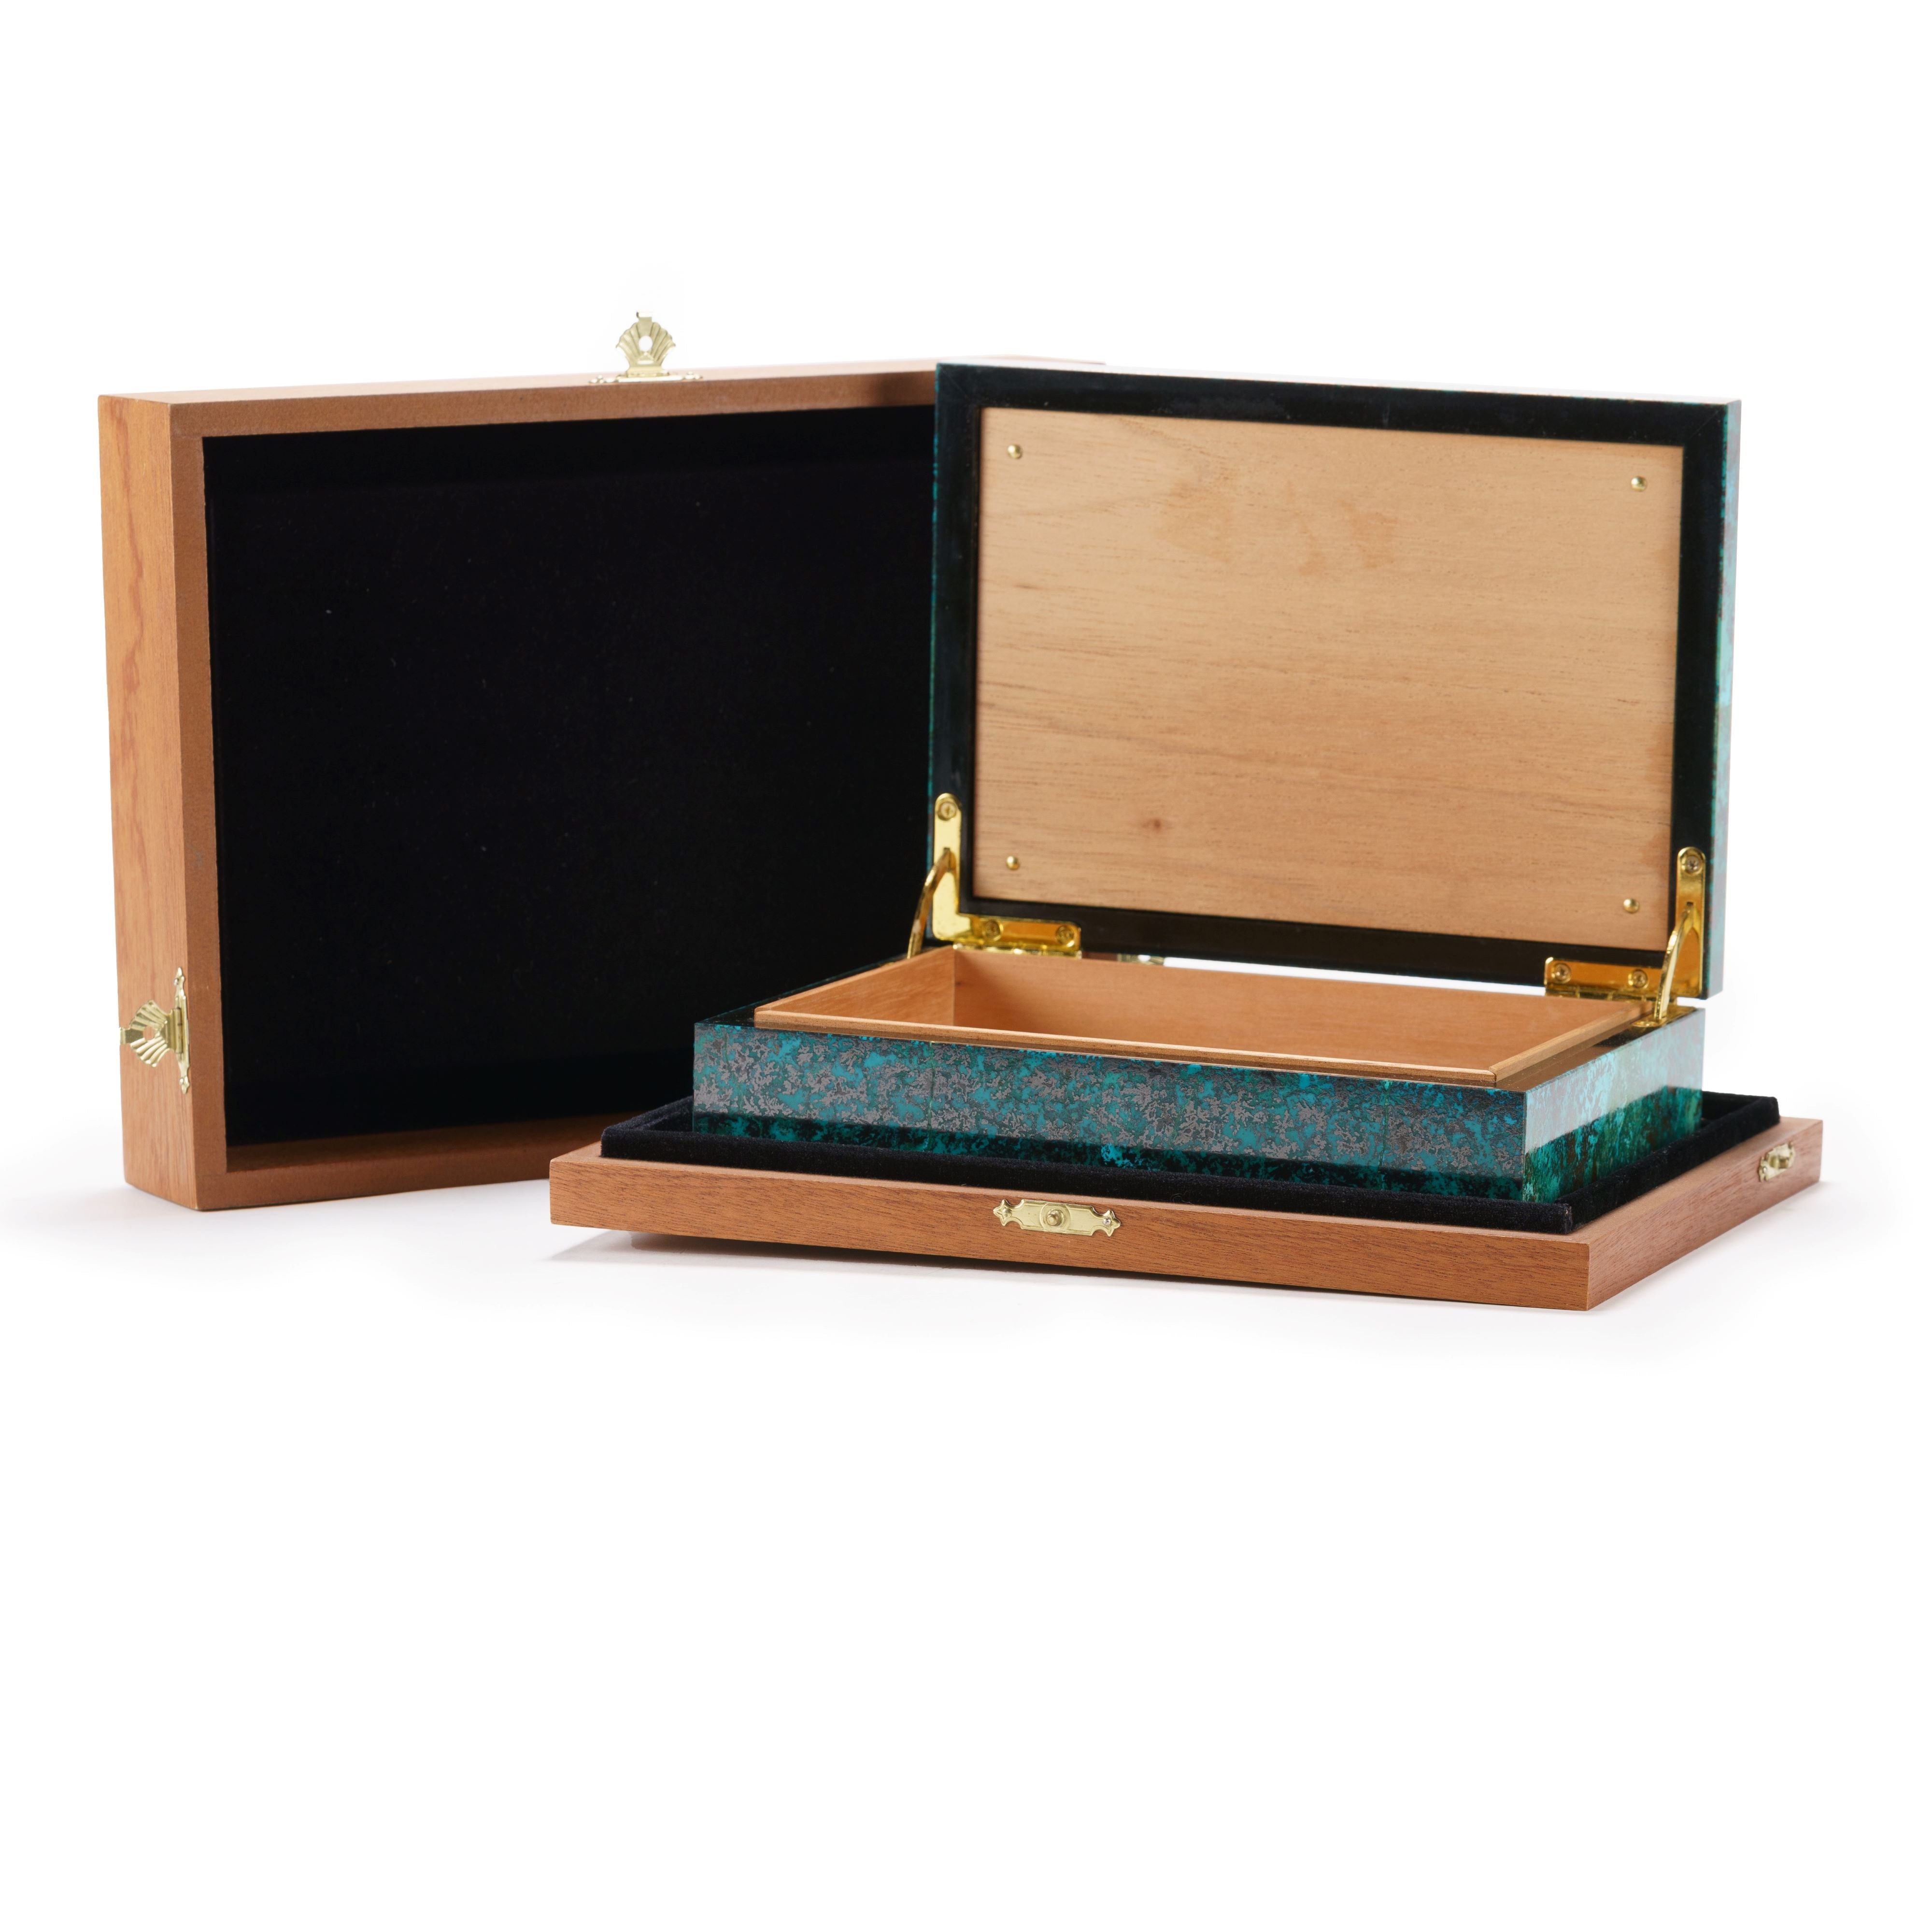 Shattuckite Box with Spanish Cedar Display Case